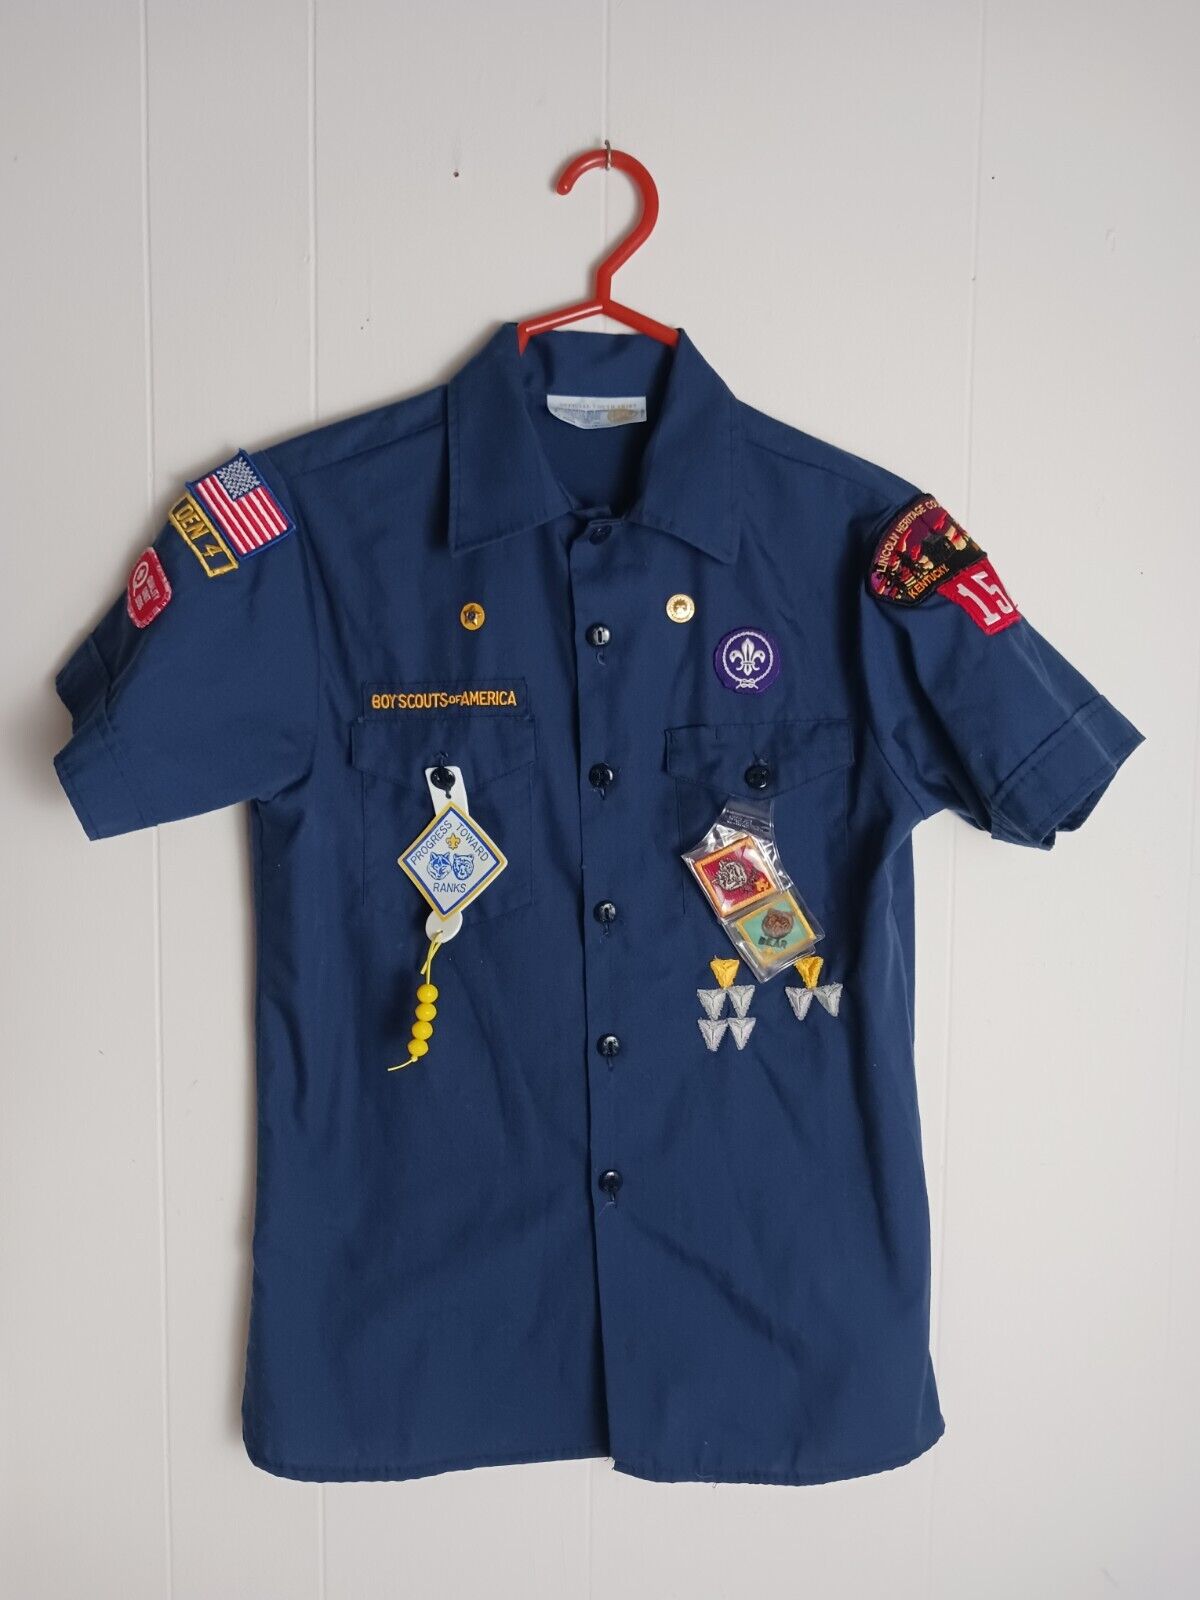 Vintage Youth Boy Scout Uniform Shirt w Multiple Patches Pins Navy Blue Size L